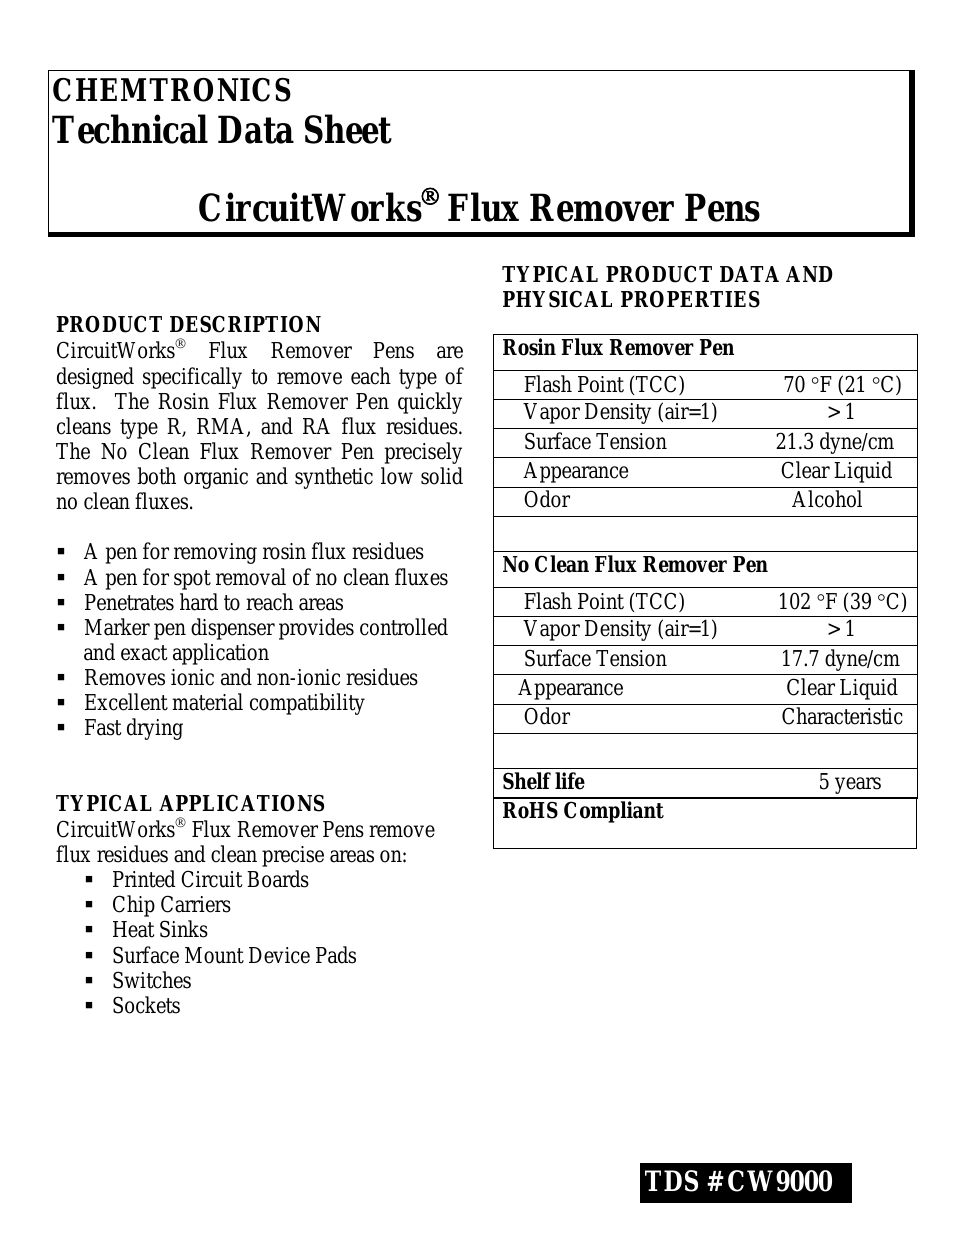 CircuitWorks® Rosin Flux Remover Pen CW9200